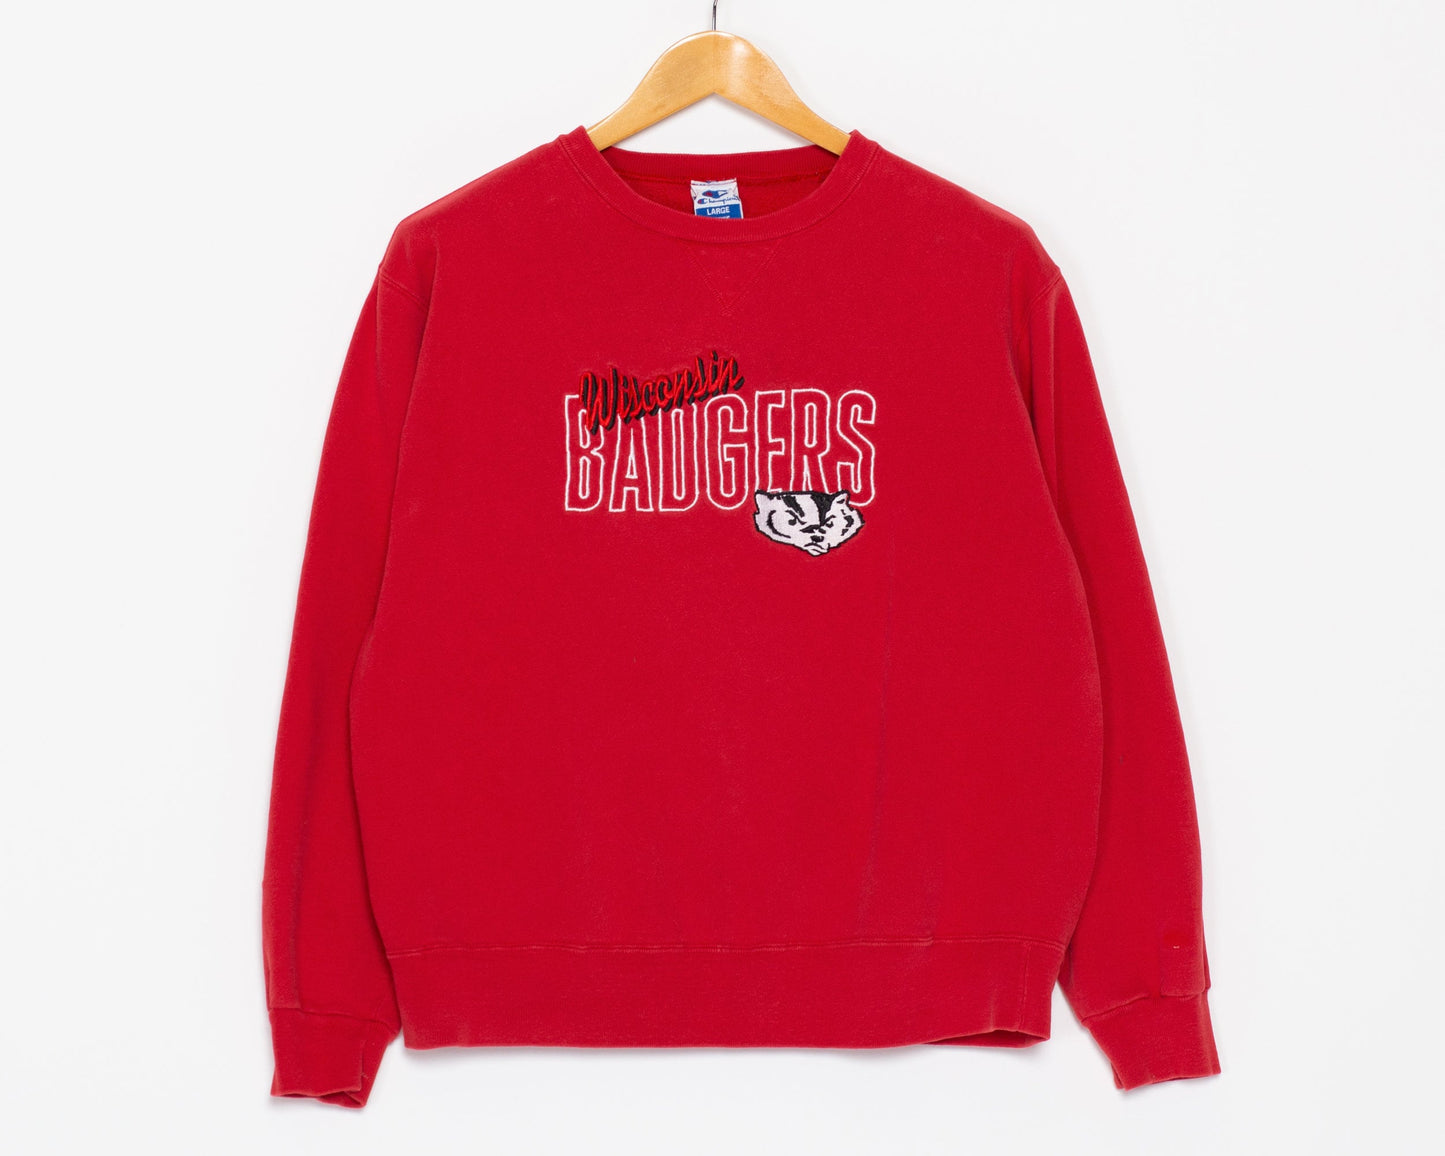 L| 90s Wisconsin Badgers Champion Sweatshirt - Men's Large | Vintage Red University Bucky Badger Graphic V Stitch Crewneck